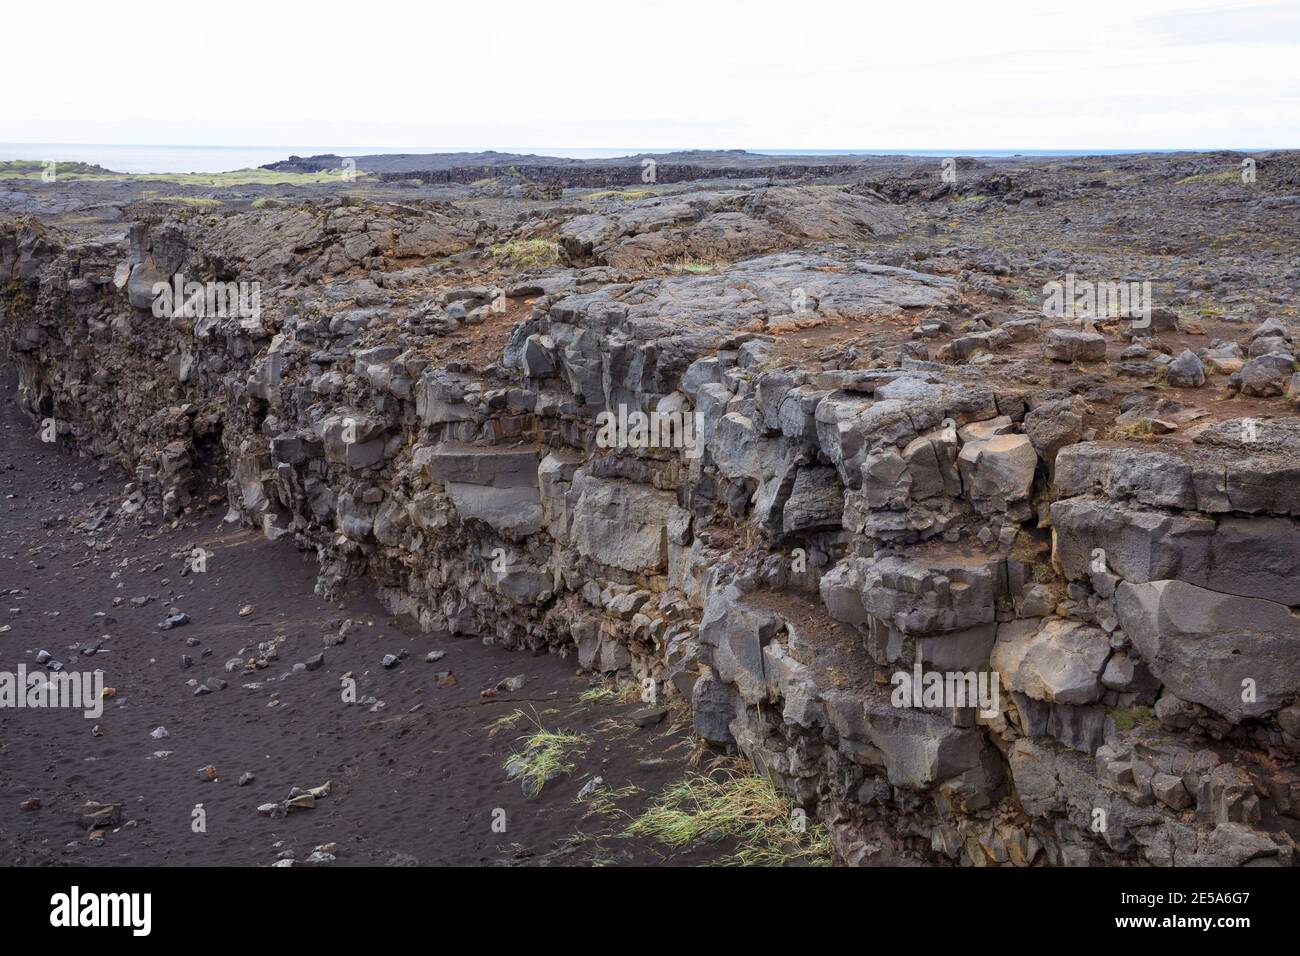 Valley Midlinda, Bru milli Heimsalfa, rift valley between two tectonic plates, Iceland Stock Photo